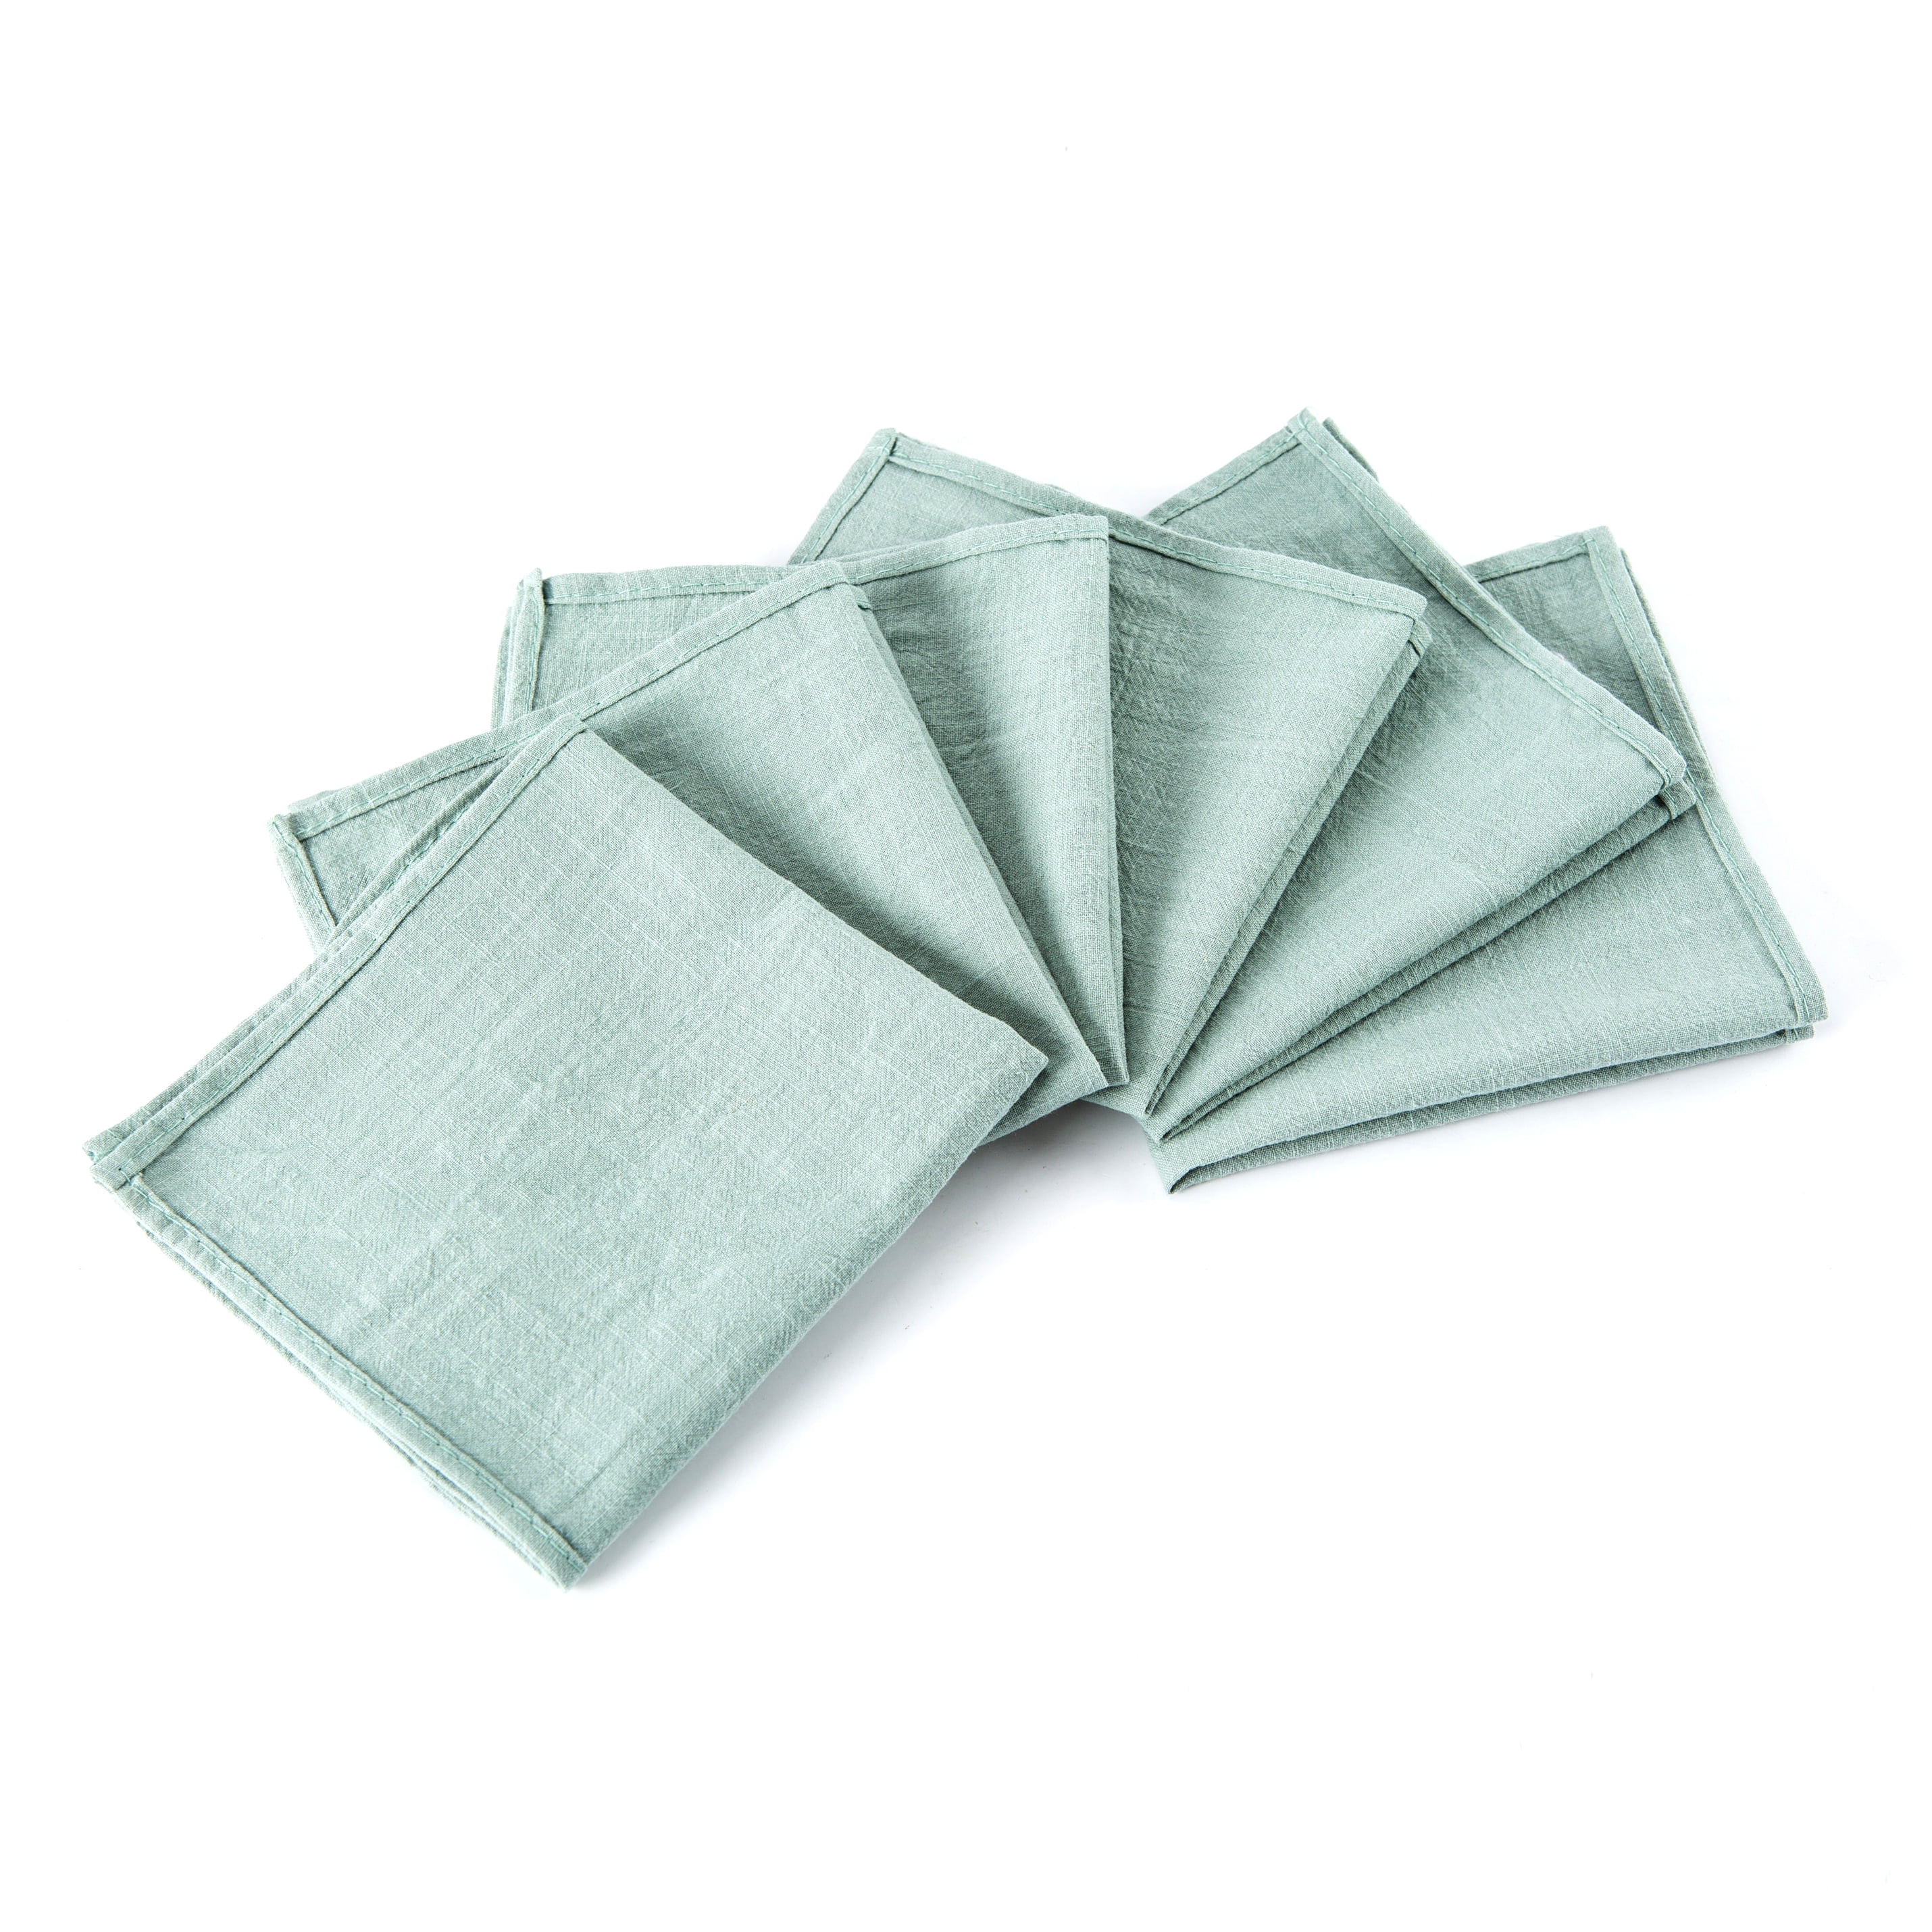 Reusable Everyday Cloth Napkins, Mint Green Natural Cotton Napkins 12 inch  Unpaper Towels Small Cotton Squares Set Of 6